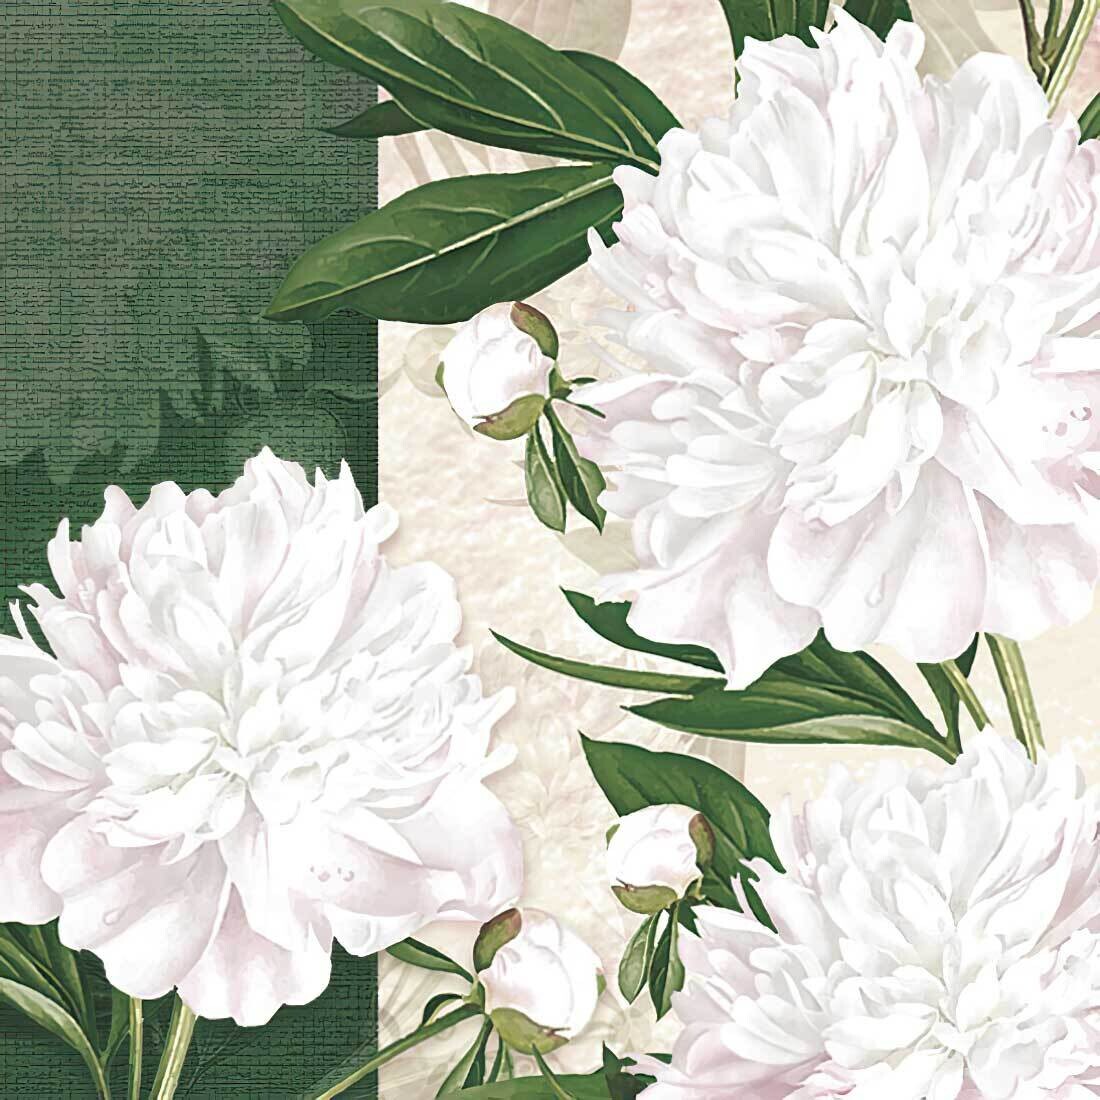 Decoupage Paper Napkins - Floral - Dewed White Peonies (1 Sheet)